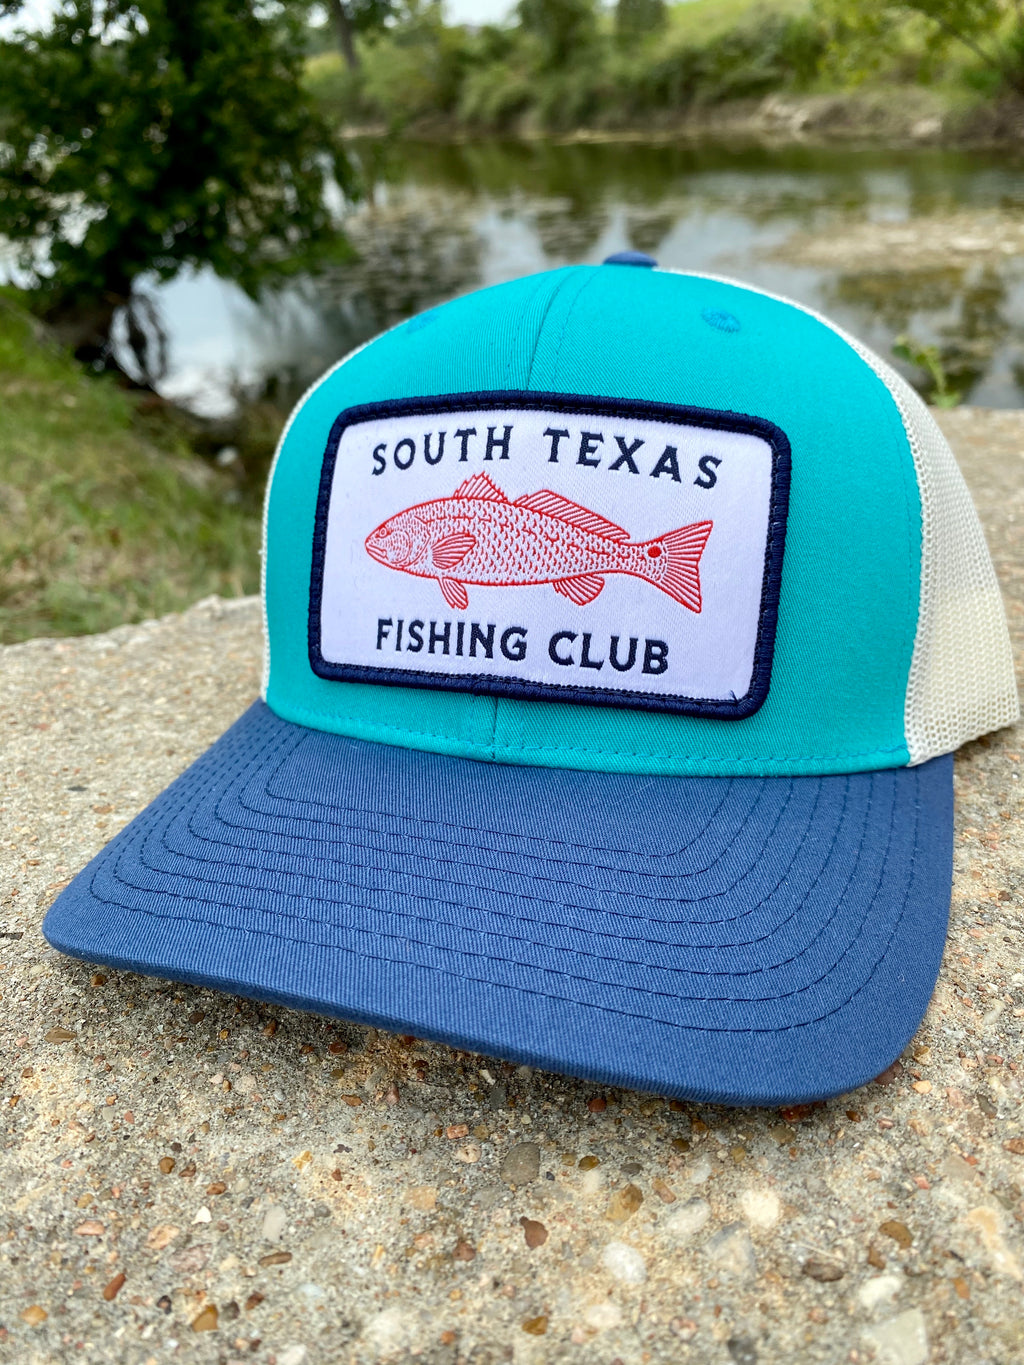 South Texas Fishing Club Trucker Hat - Teal/Tan/Blue